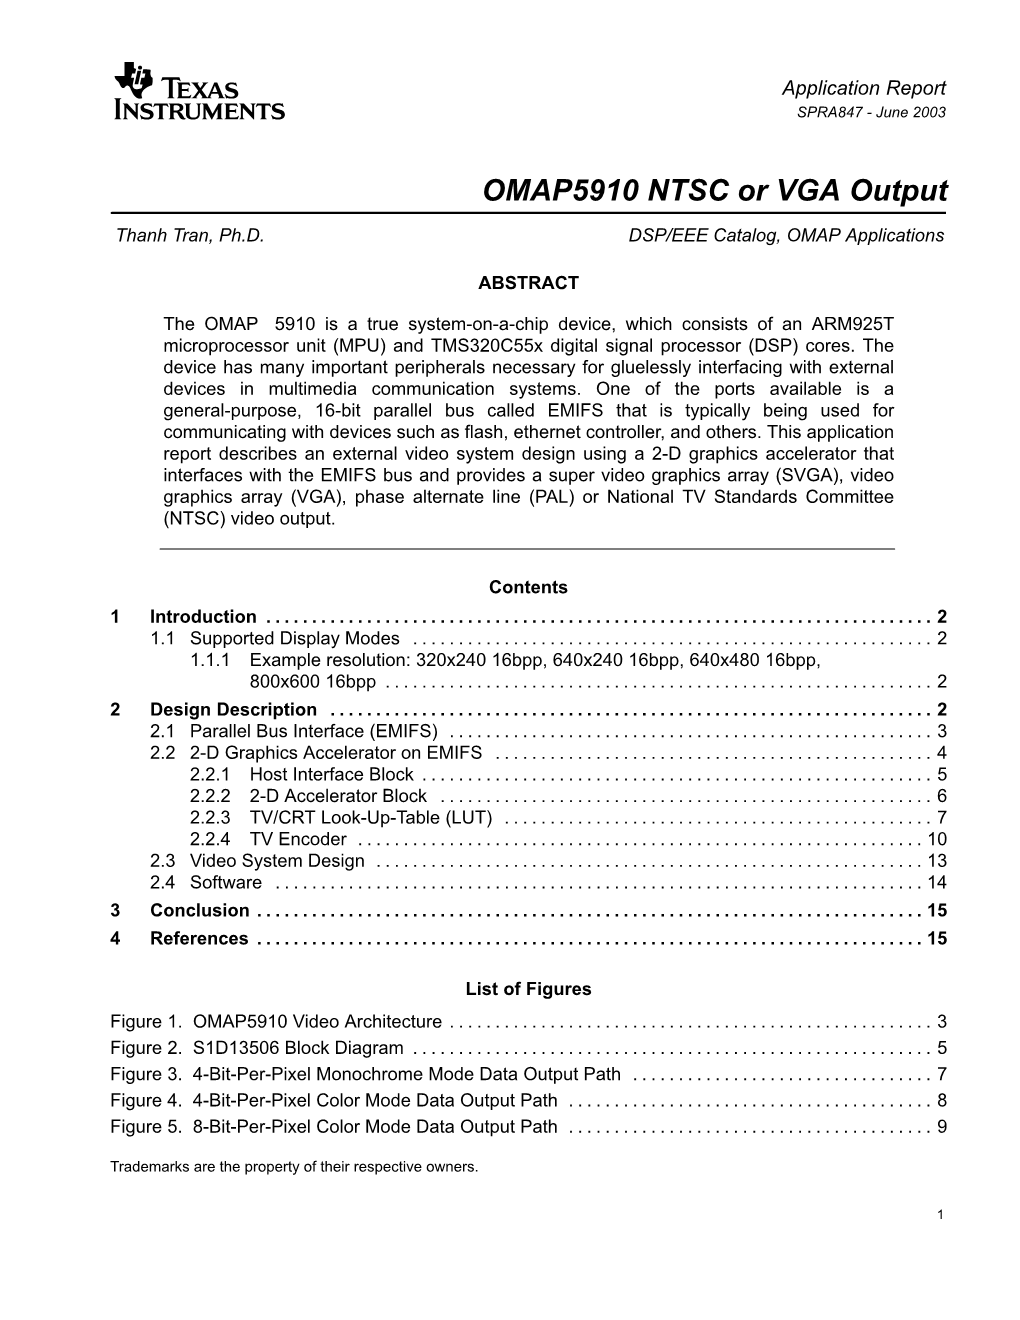 OMAP5910 NTSC Or VGA Output